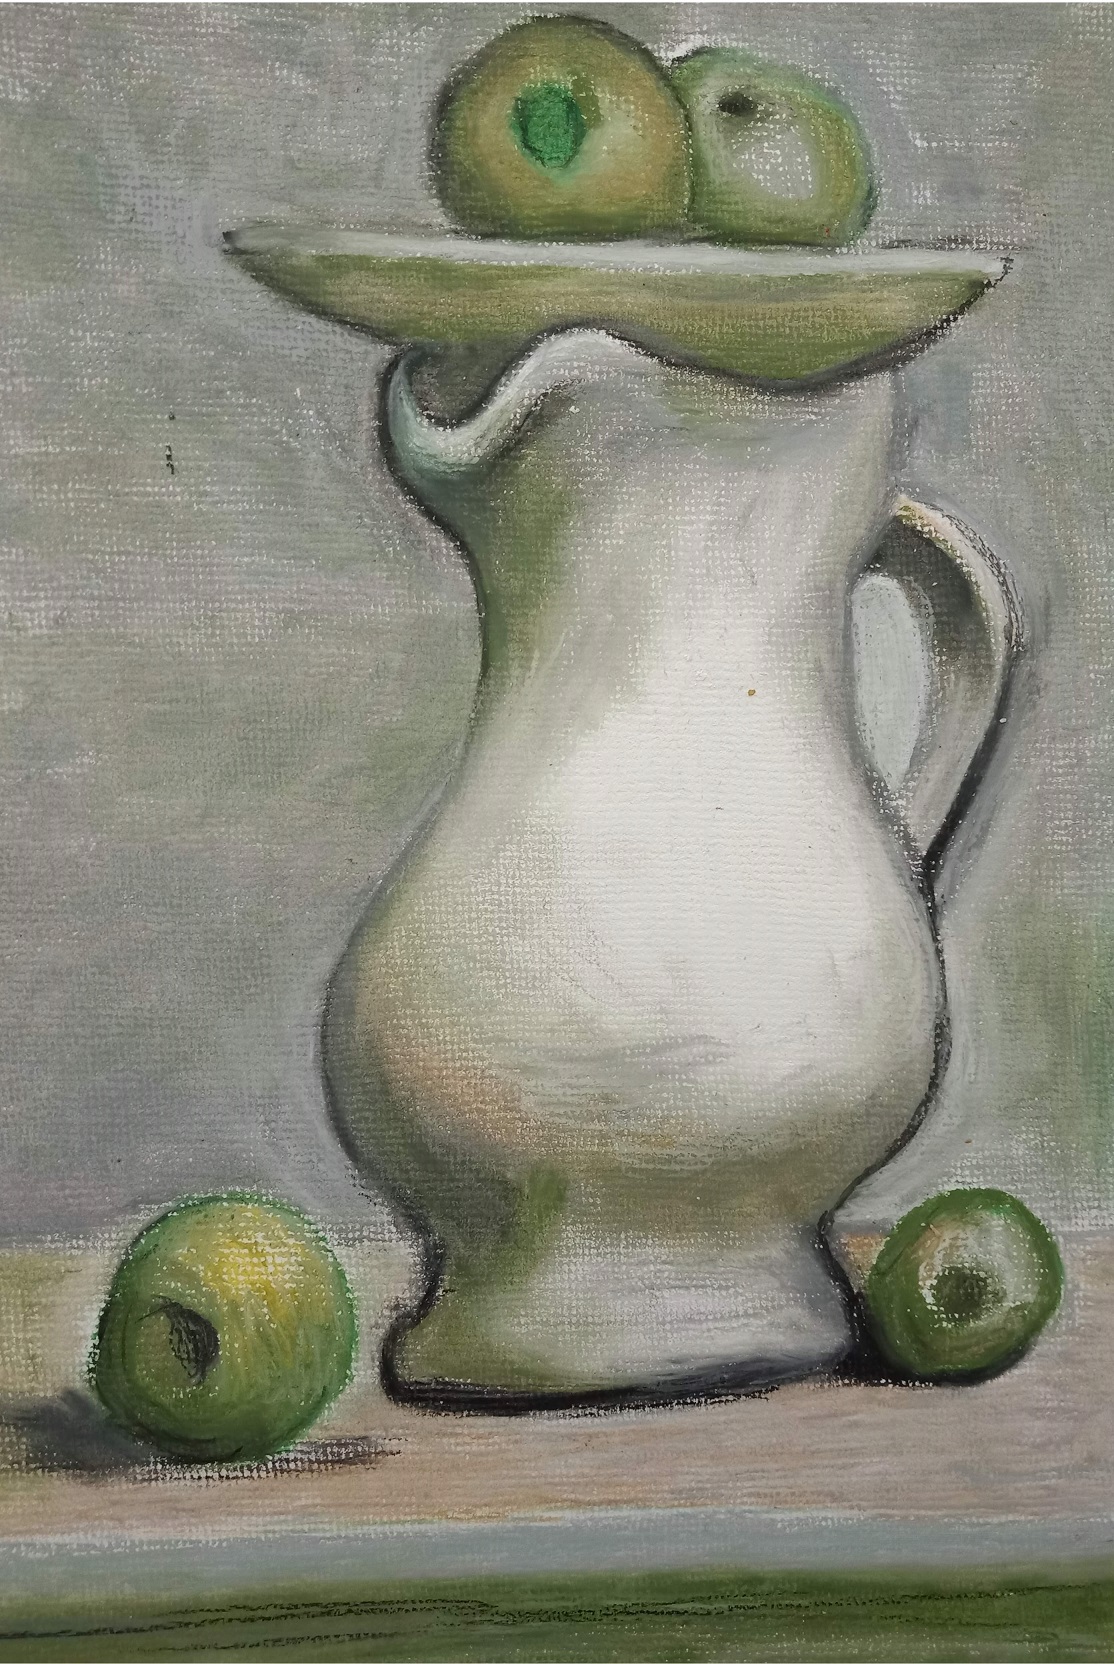 Olives and vase